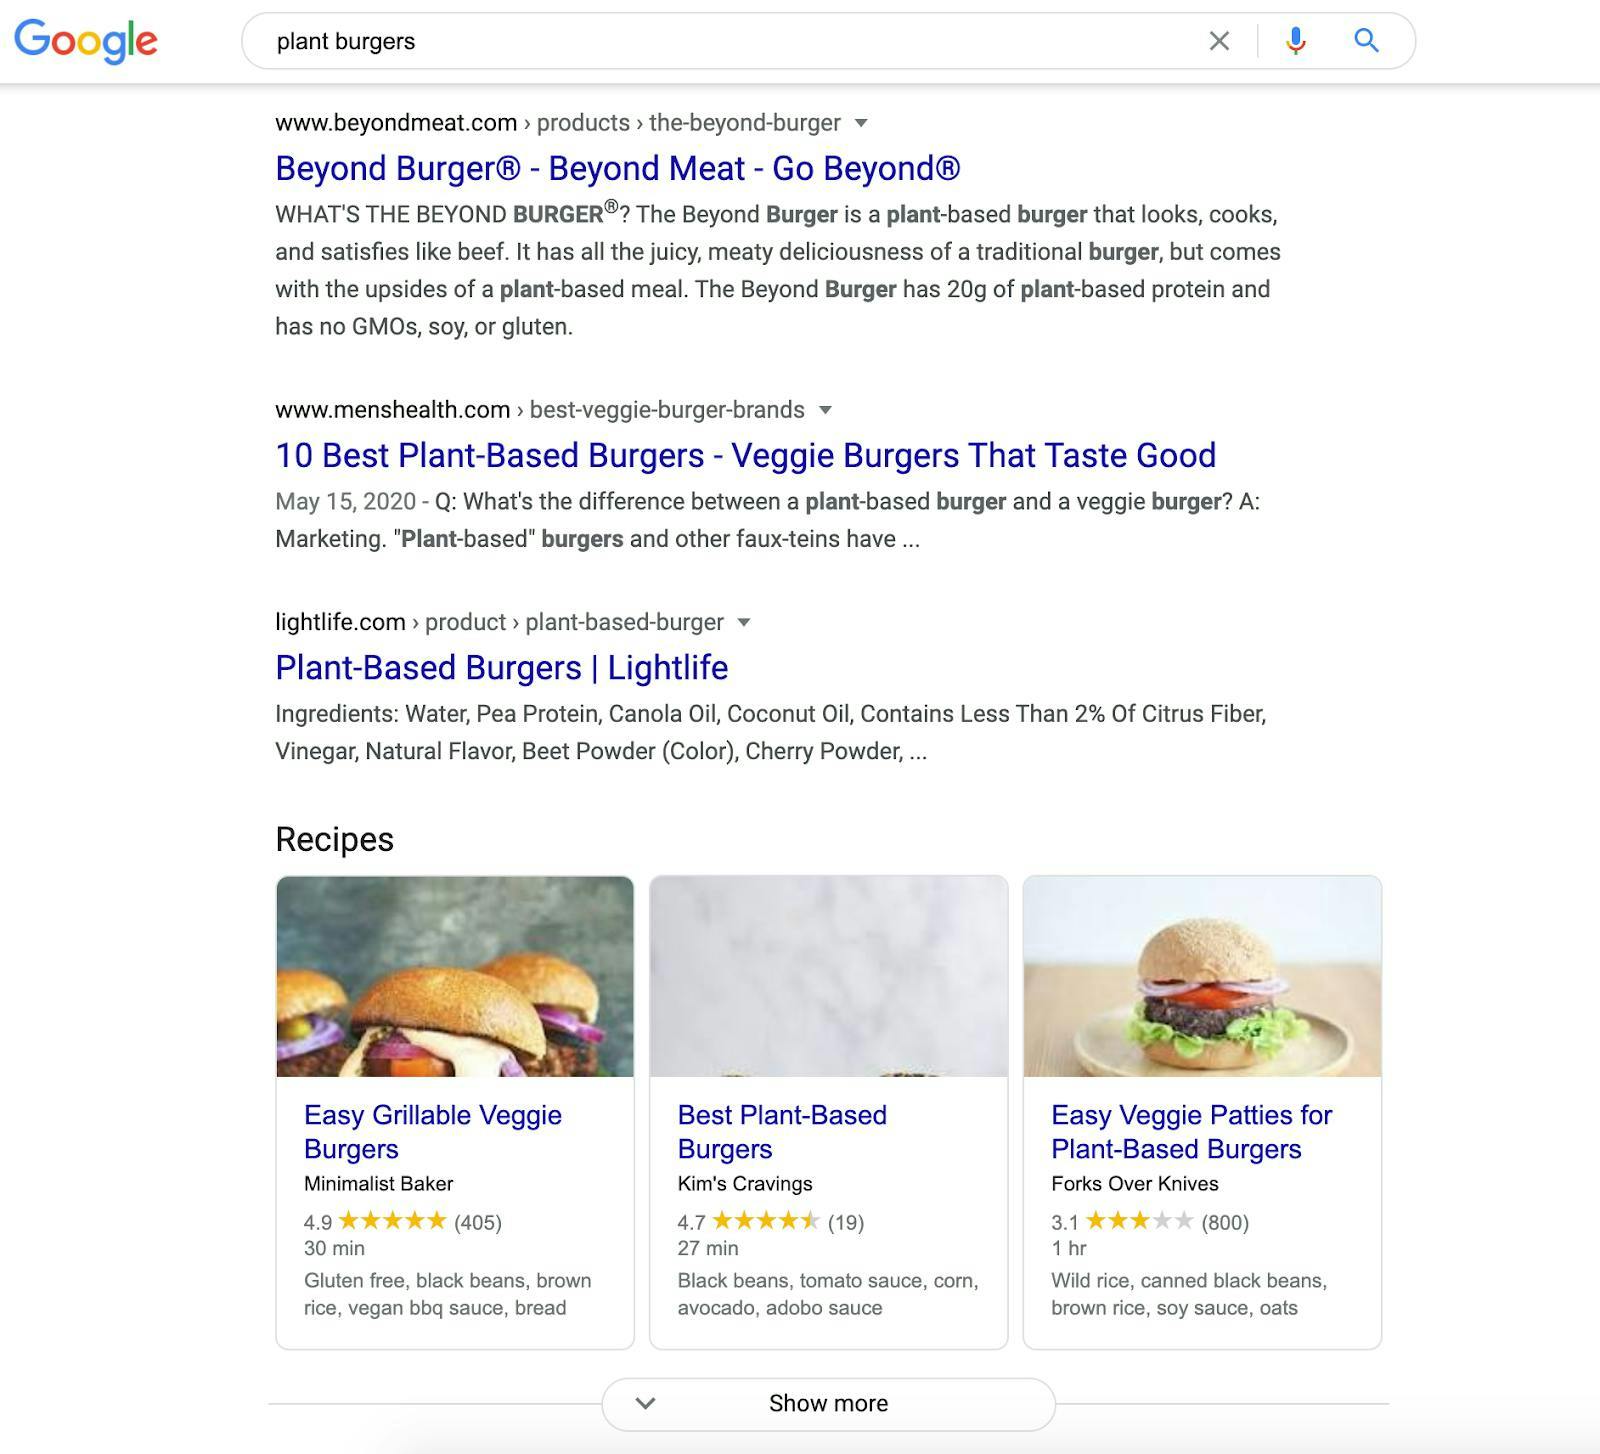 SEO example digital marketing for "plant burgers"